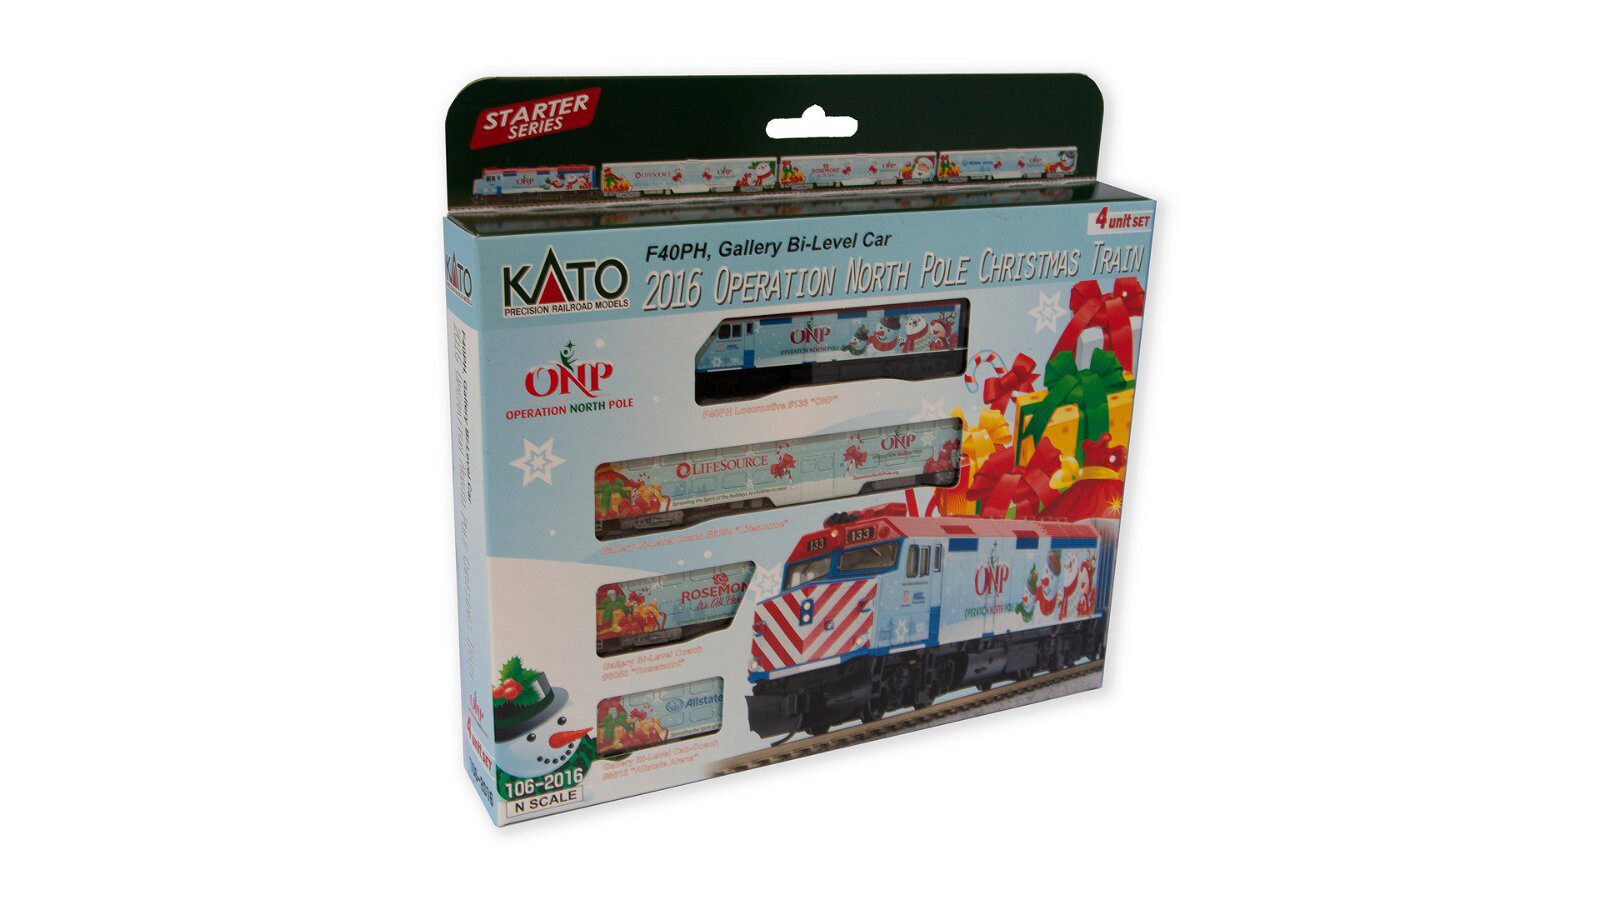 Kato 701062016 Operation North Pole Christmas Train 